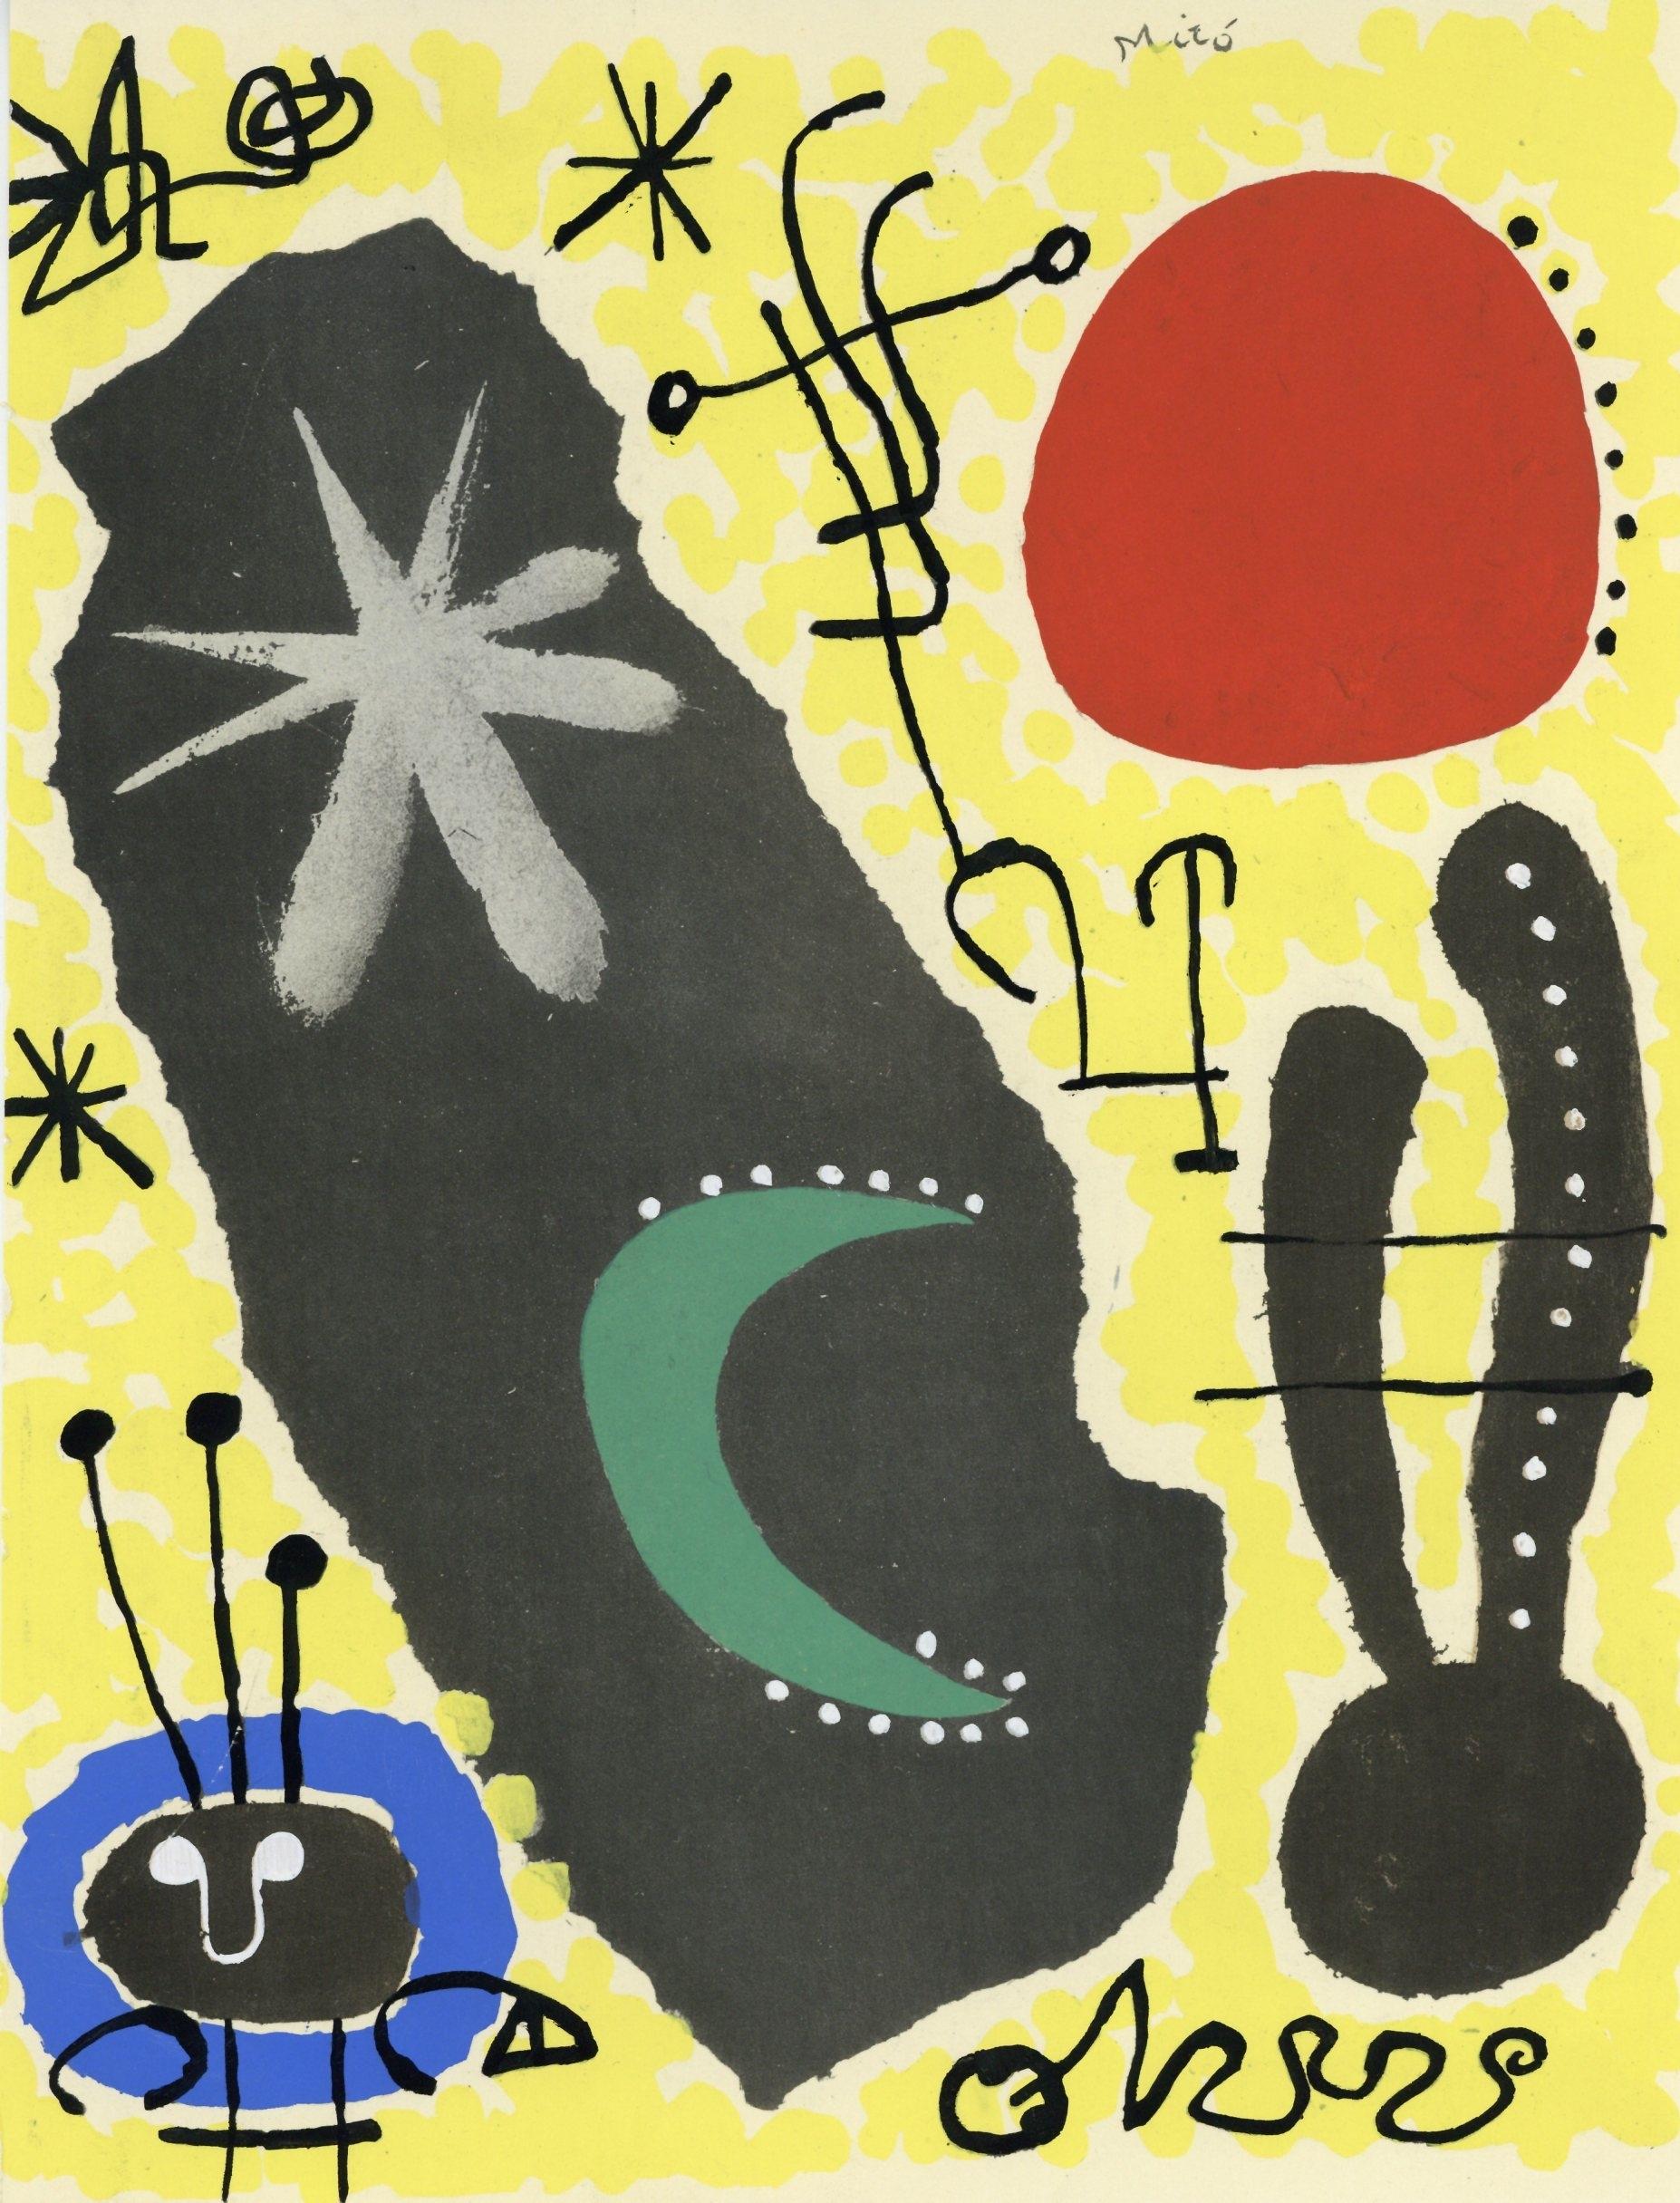 Miró, Papier collé, XXe Siècle (nach)